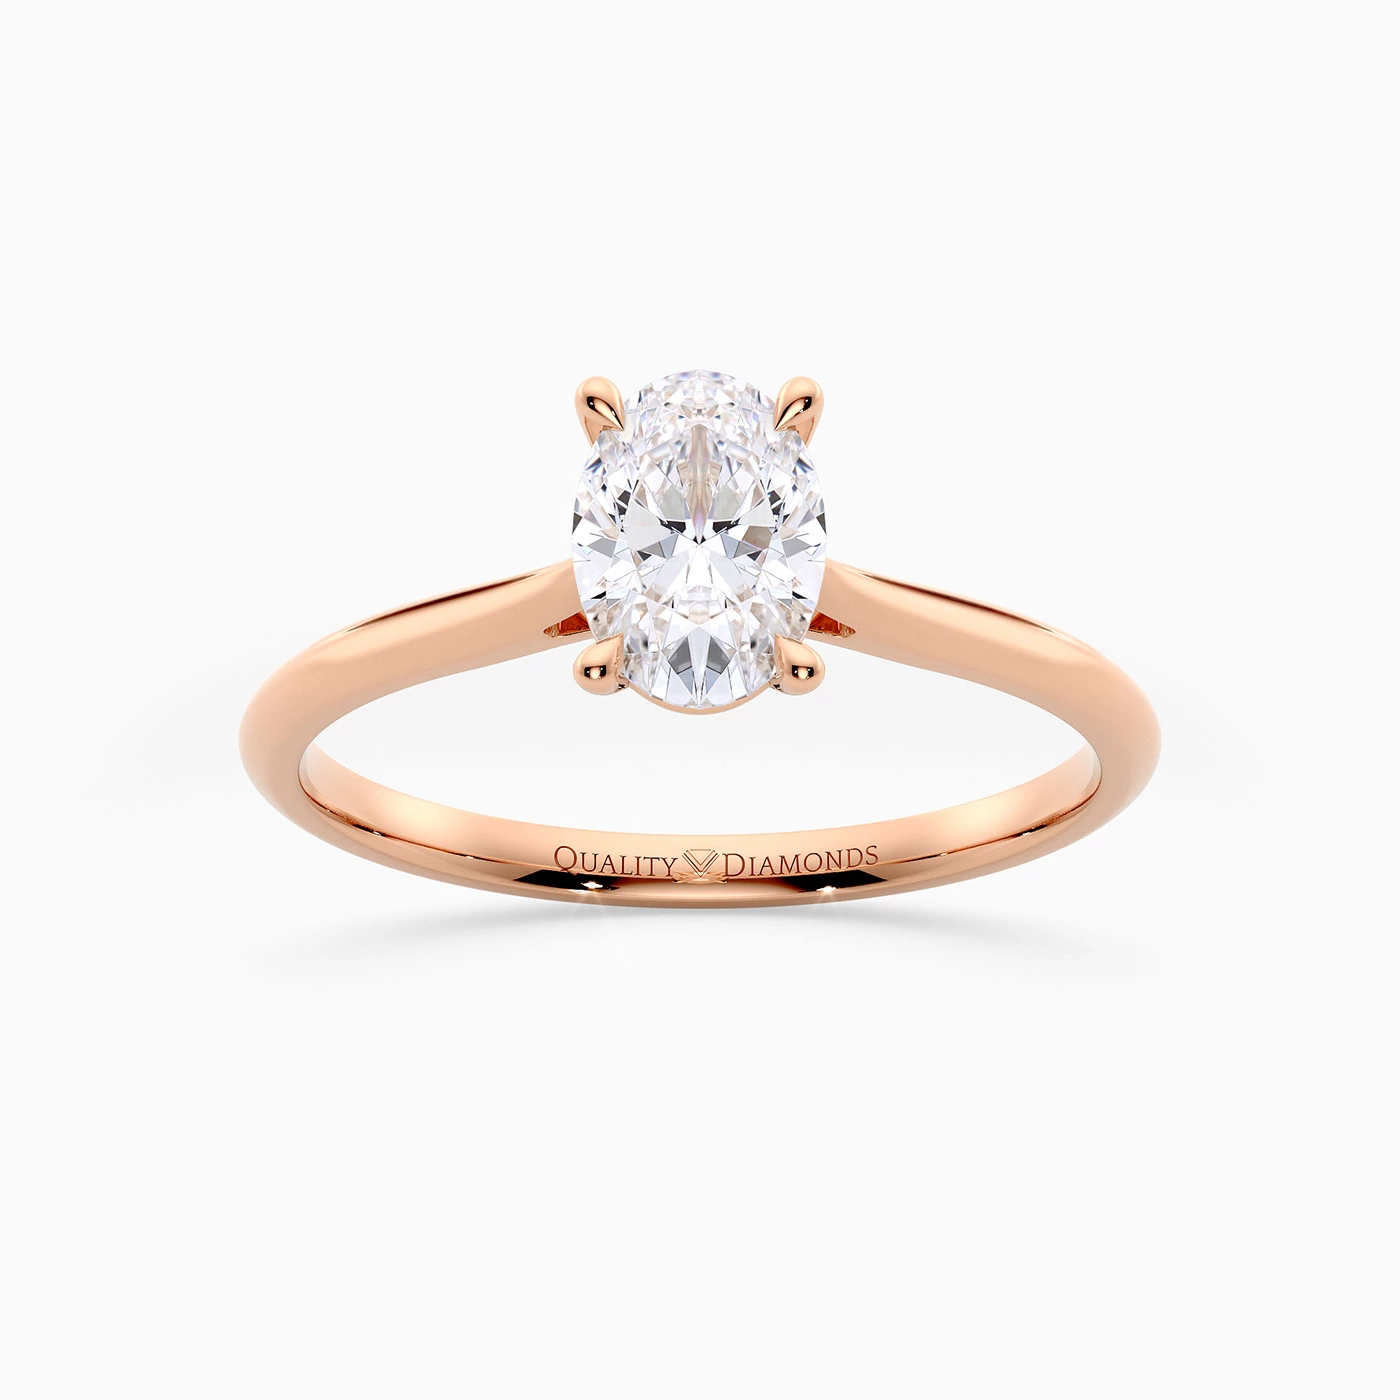 Oval Carys Diamond Ring in 18K Rose Gold